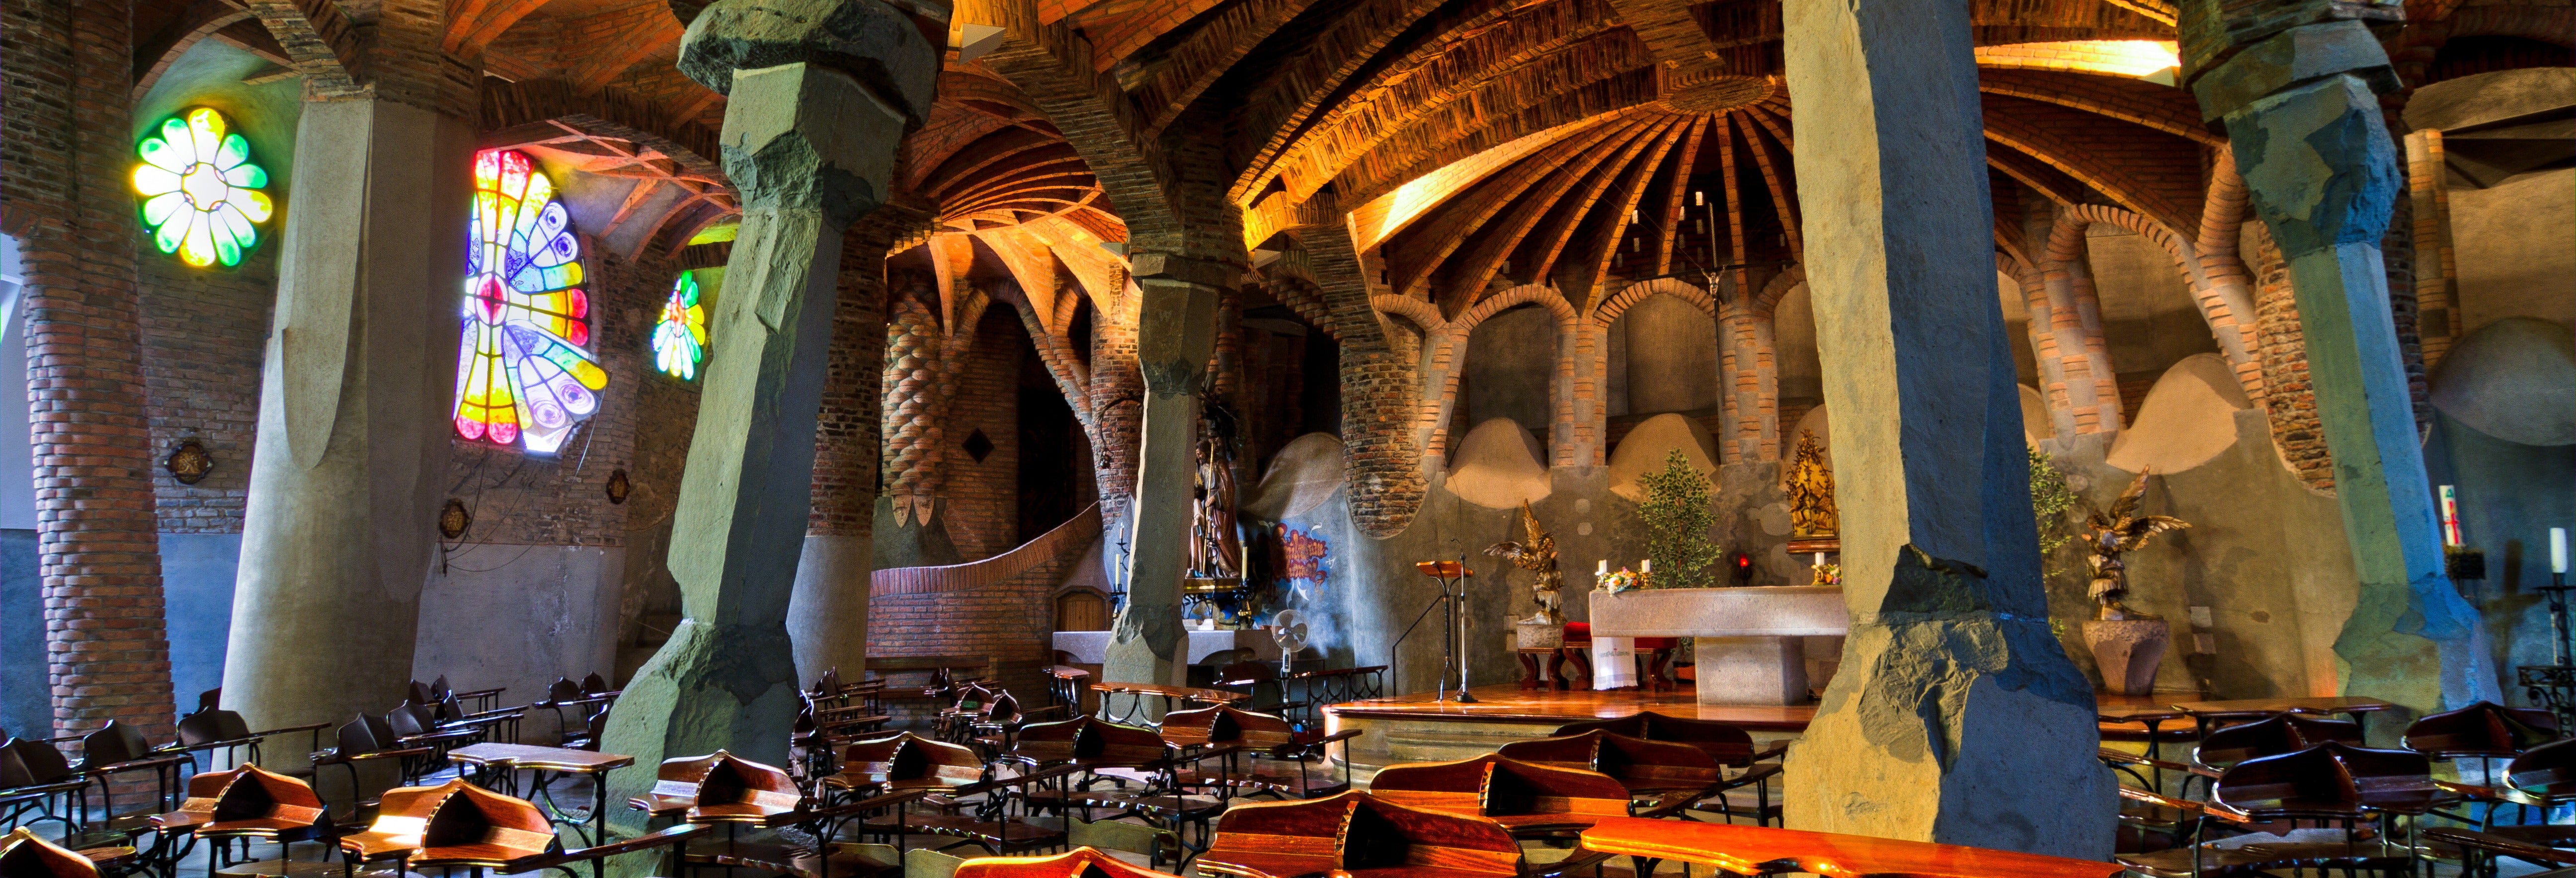 Ingresso para a Cripta Gaudí